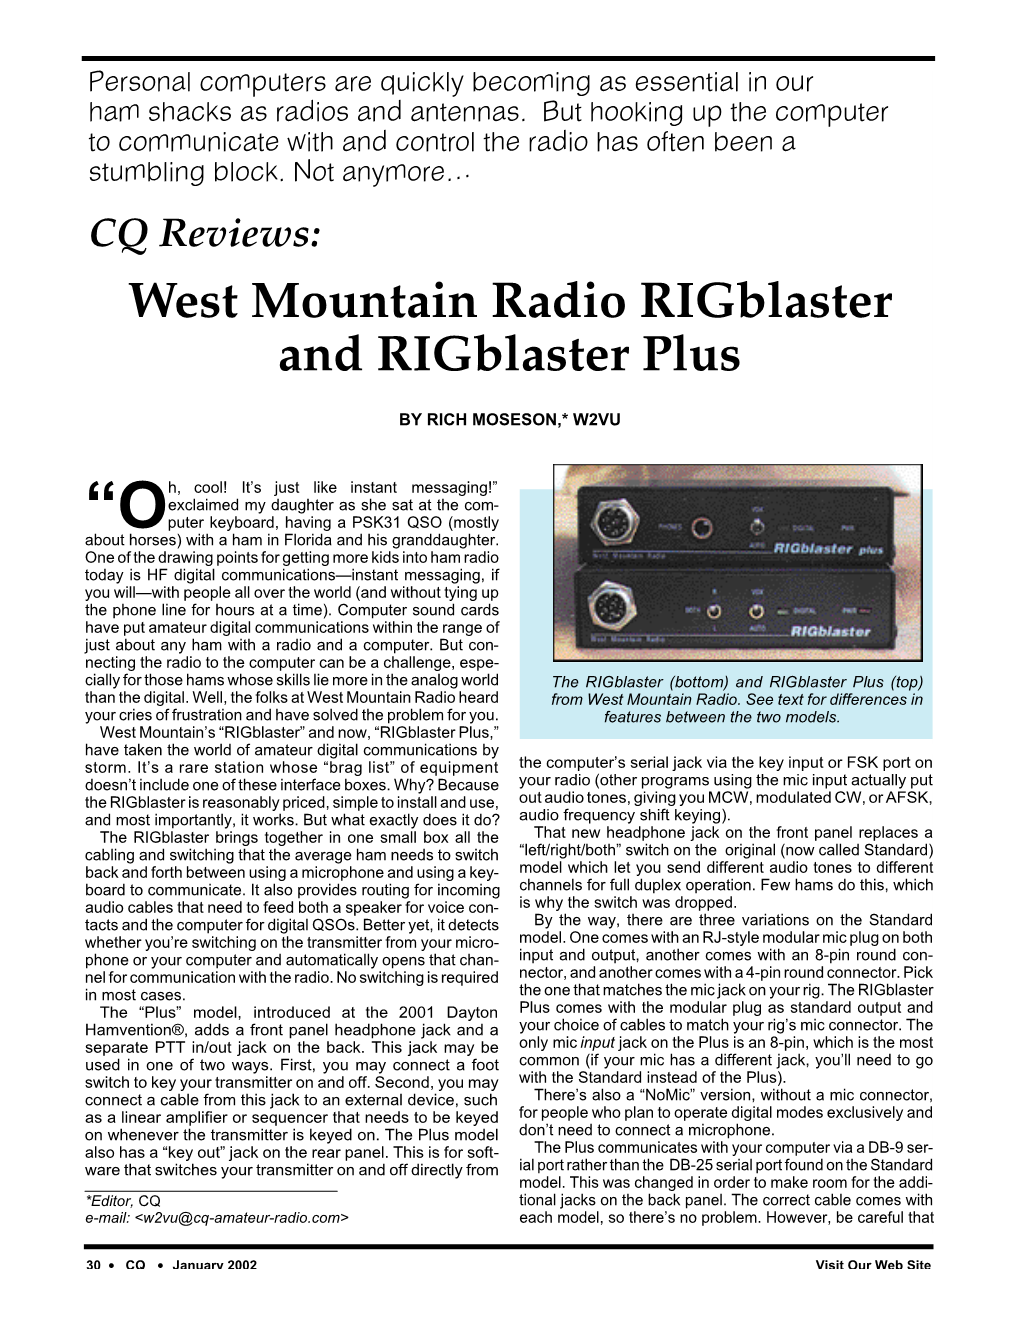 West Mountain Radio Rigblaster and Rigblaster Plus